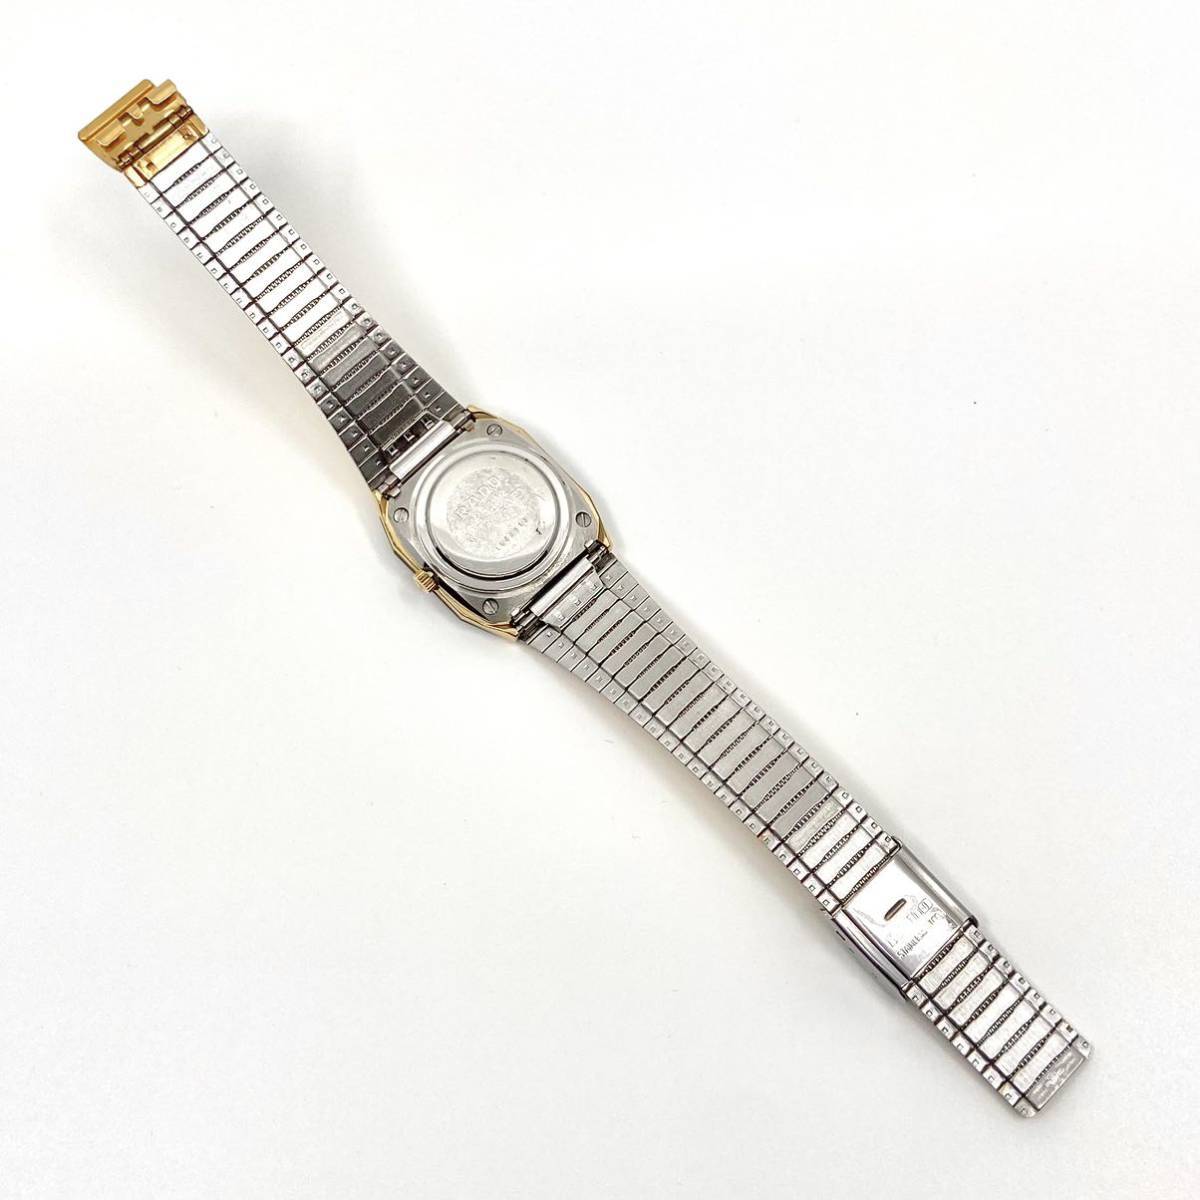 RADO 腕時計 クォーツ quartz Swiss スイス製 デイト バーインデックス 3針 ゴールド 金 ラドー D30_画像7